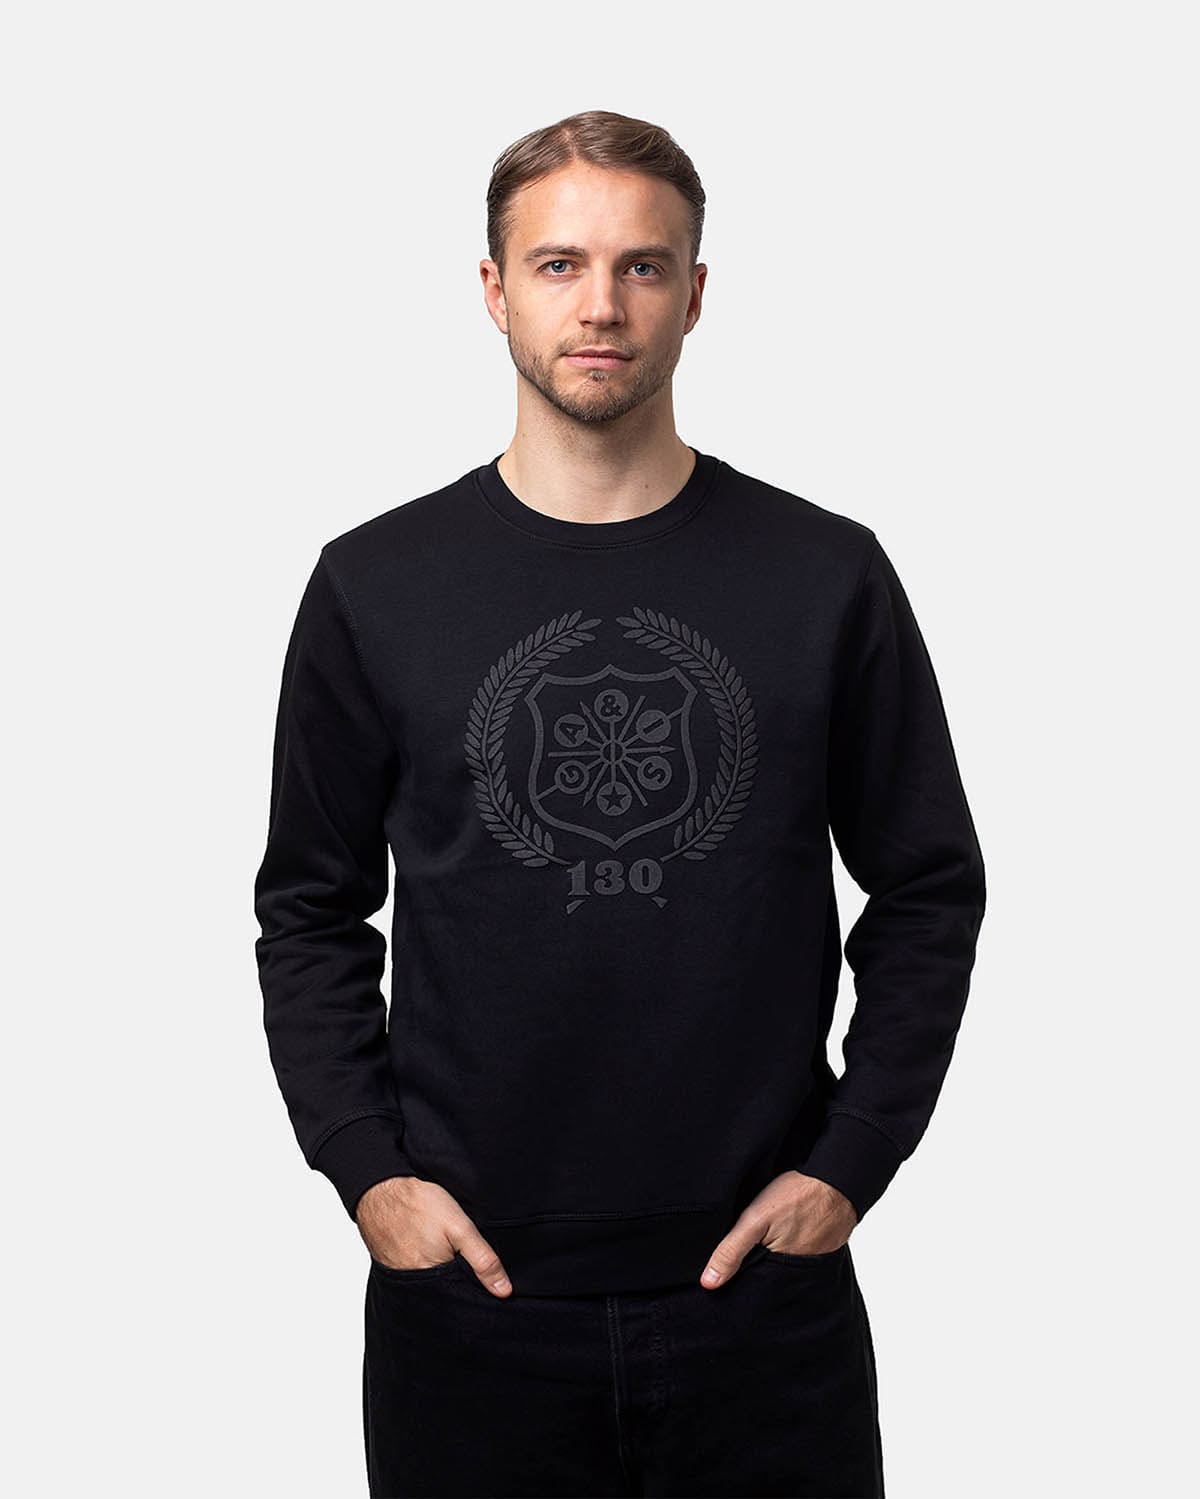 GAIS130-sweatshirt-svart-1